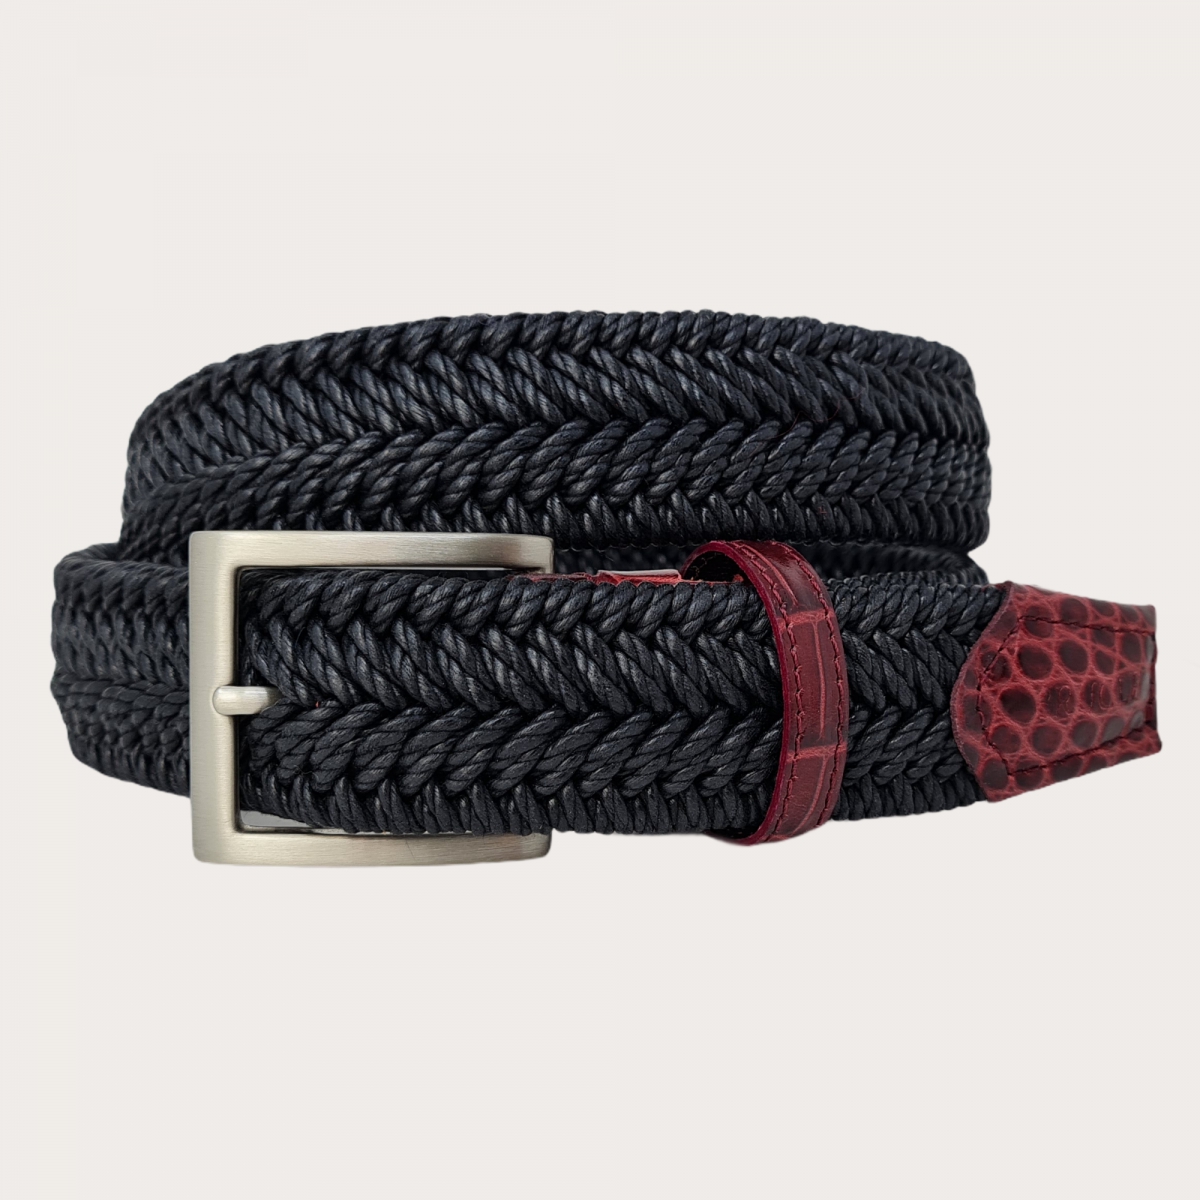 BRUCLE Black braided elastic belt with burgundy leather